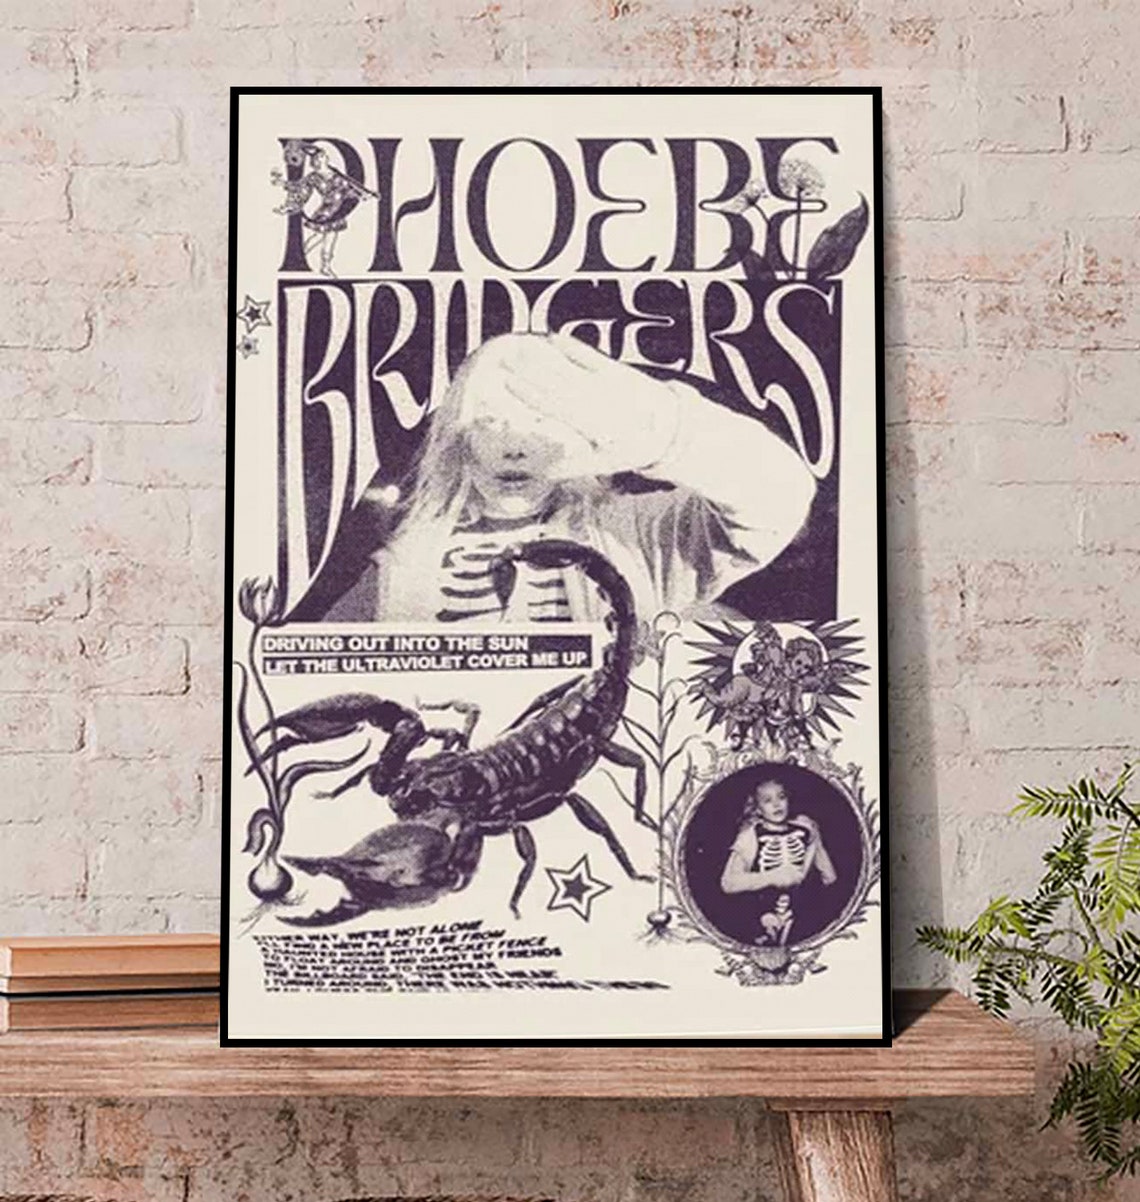 Phoebe Bridgers On Tour 2022 Poster, Phoebe Bridgers Reunion Tour 2022 Poster, Phoebe Bridgers 2022 Poster For Fan 